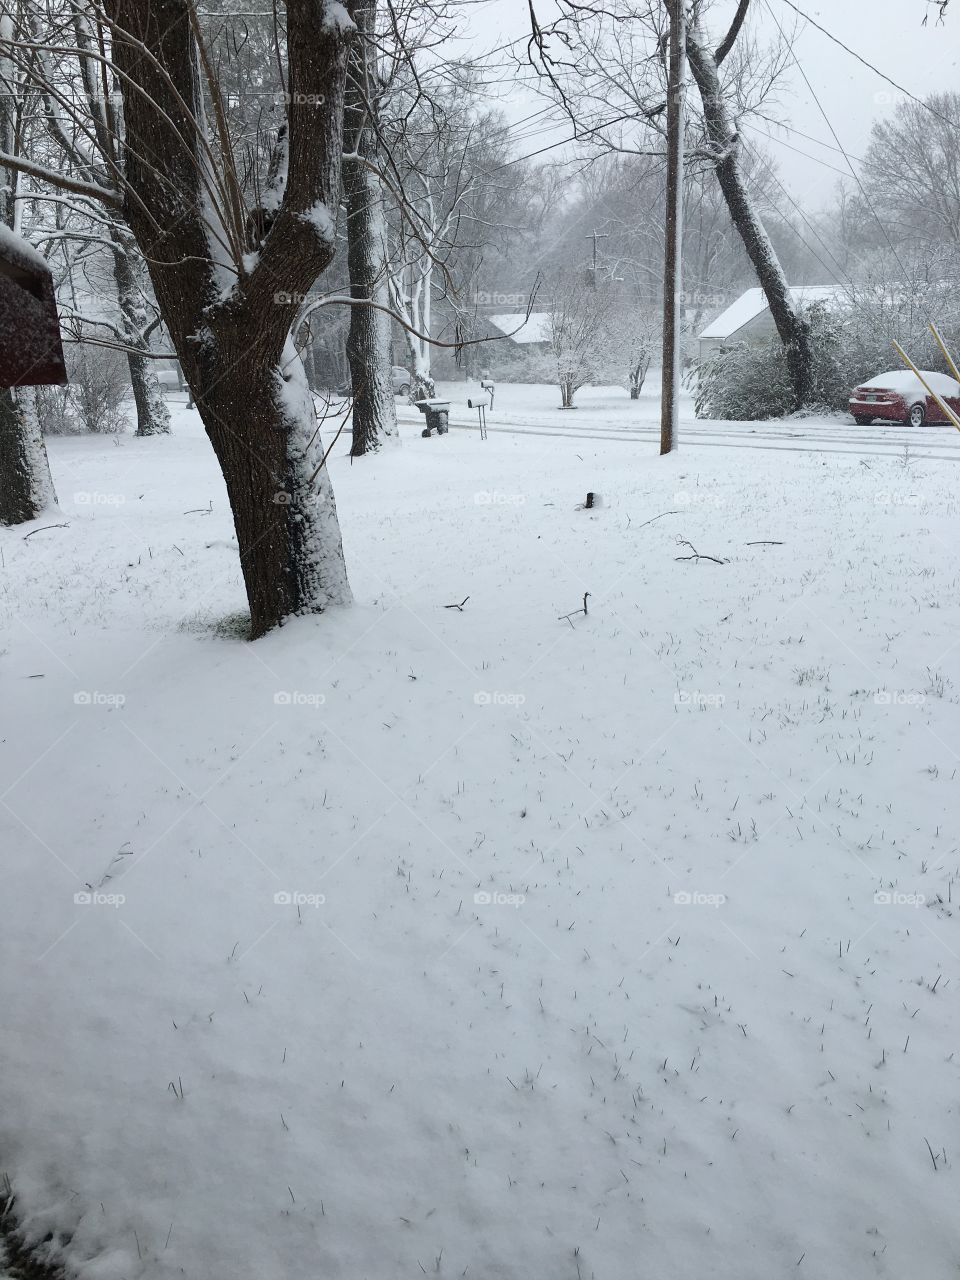 Snowy neighborhood.